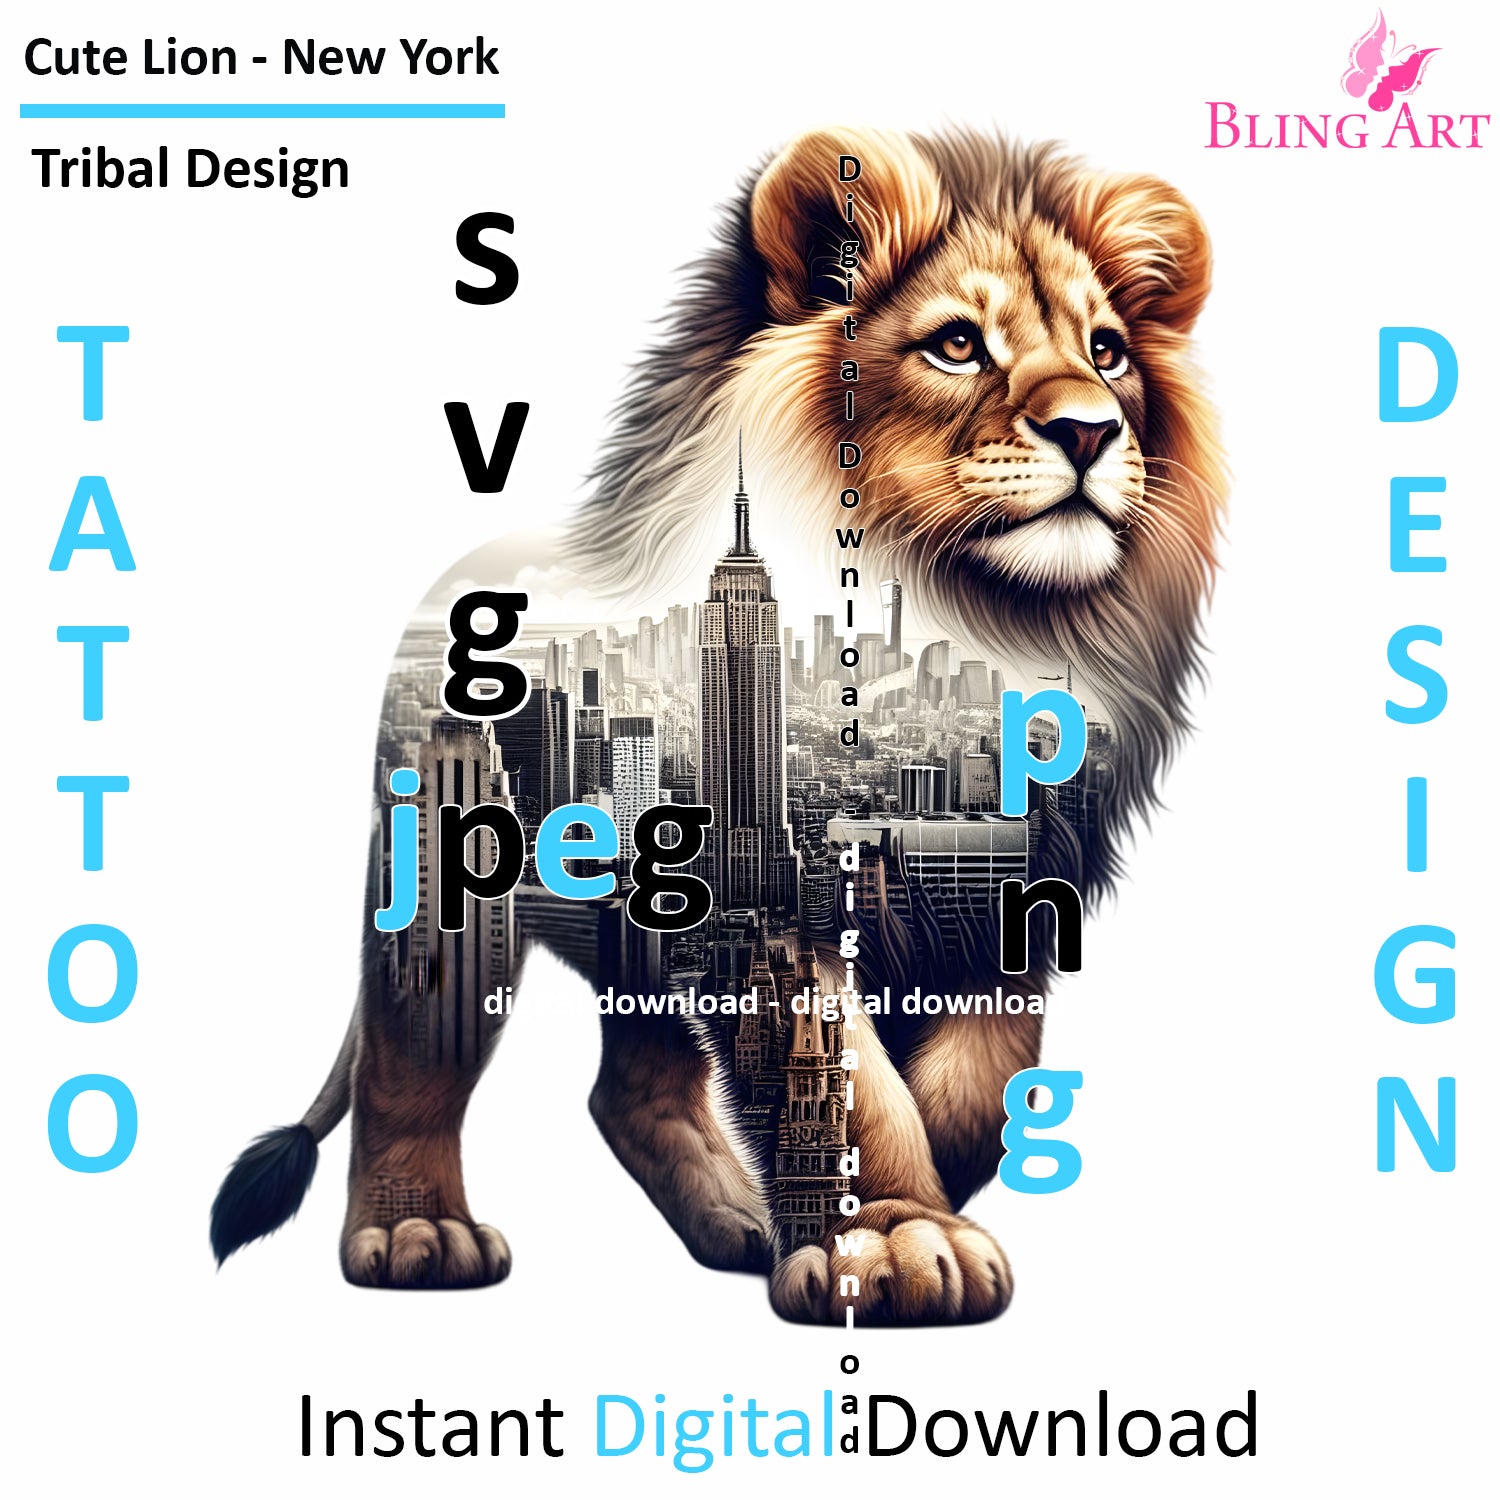 New York Lion Tribal Tattoo Art - Digital Design (PNG, JPEG, SVG) - Instant Download for Tattoos, T-Shirts, Wall Art